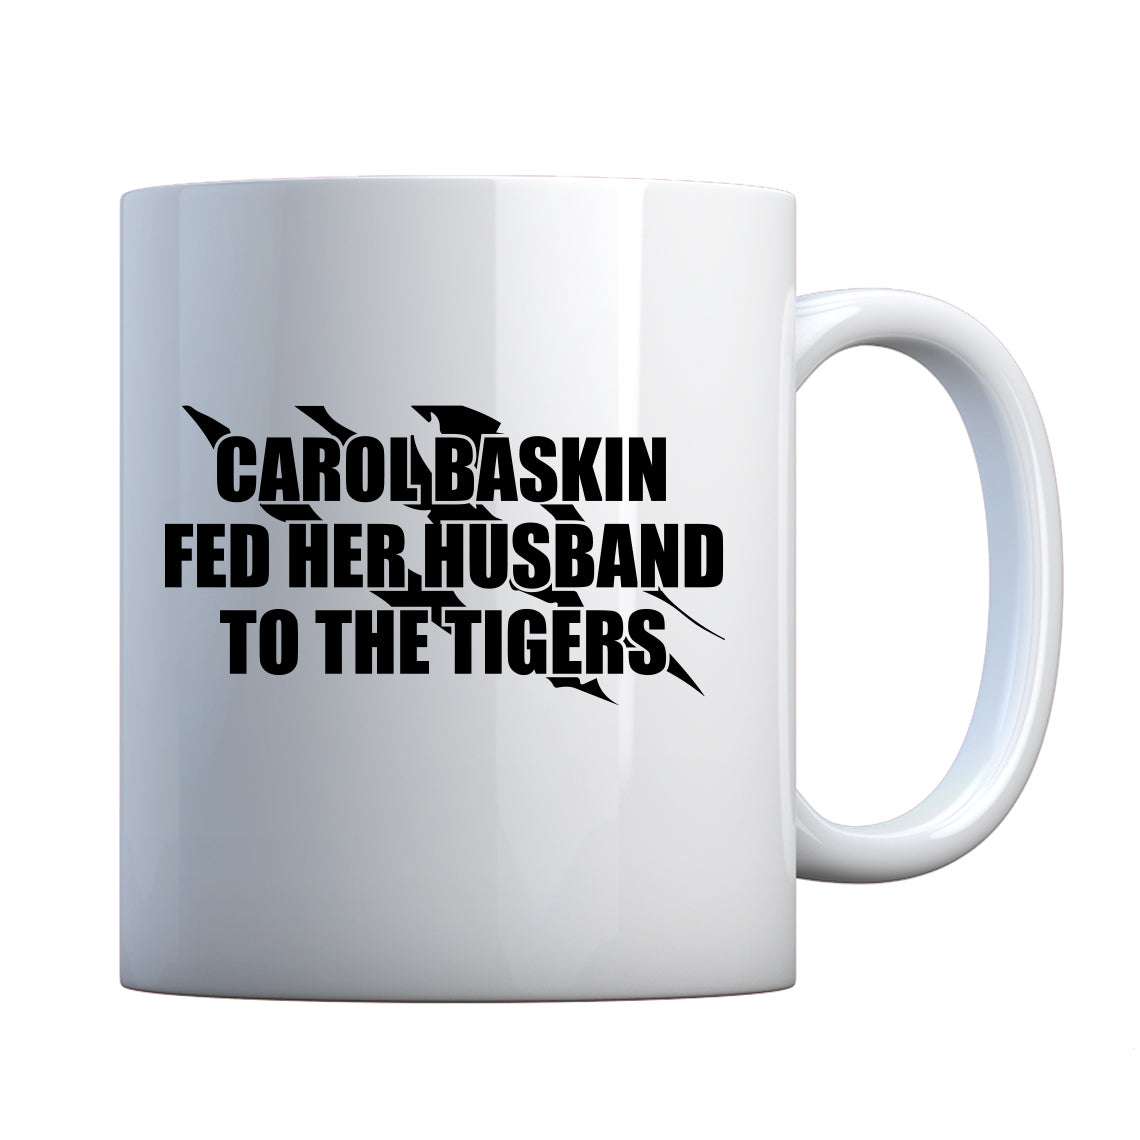 Carole Baskin Fed Her Husband to the Tigers Ceramic Gift Mug